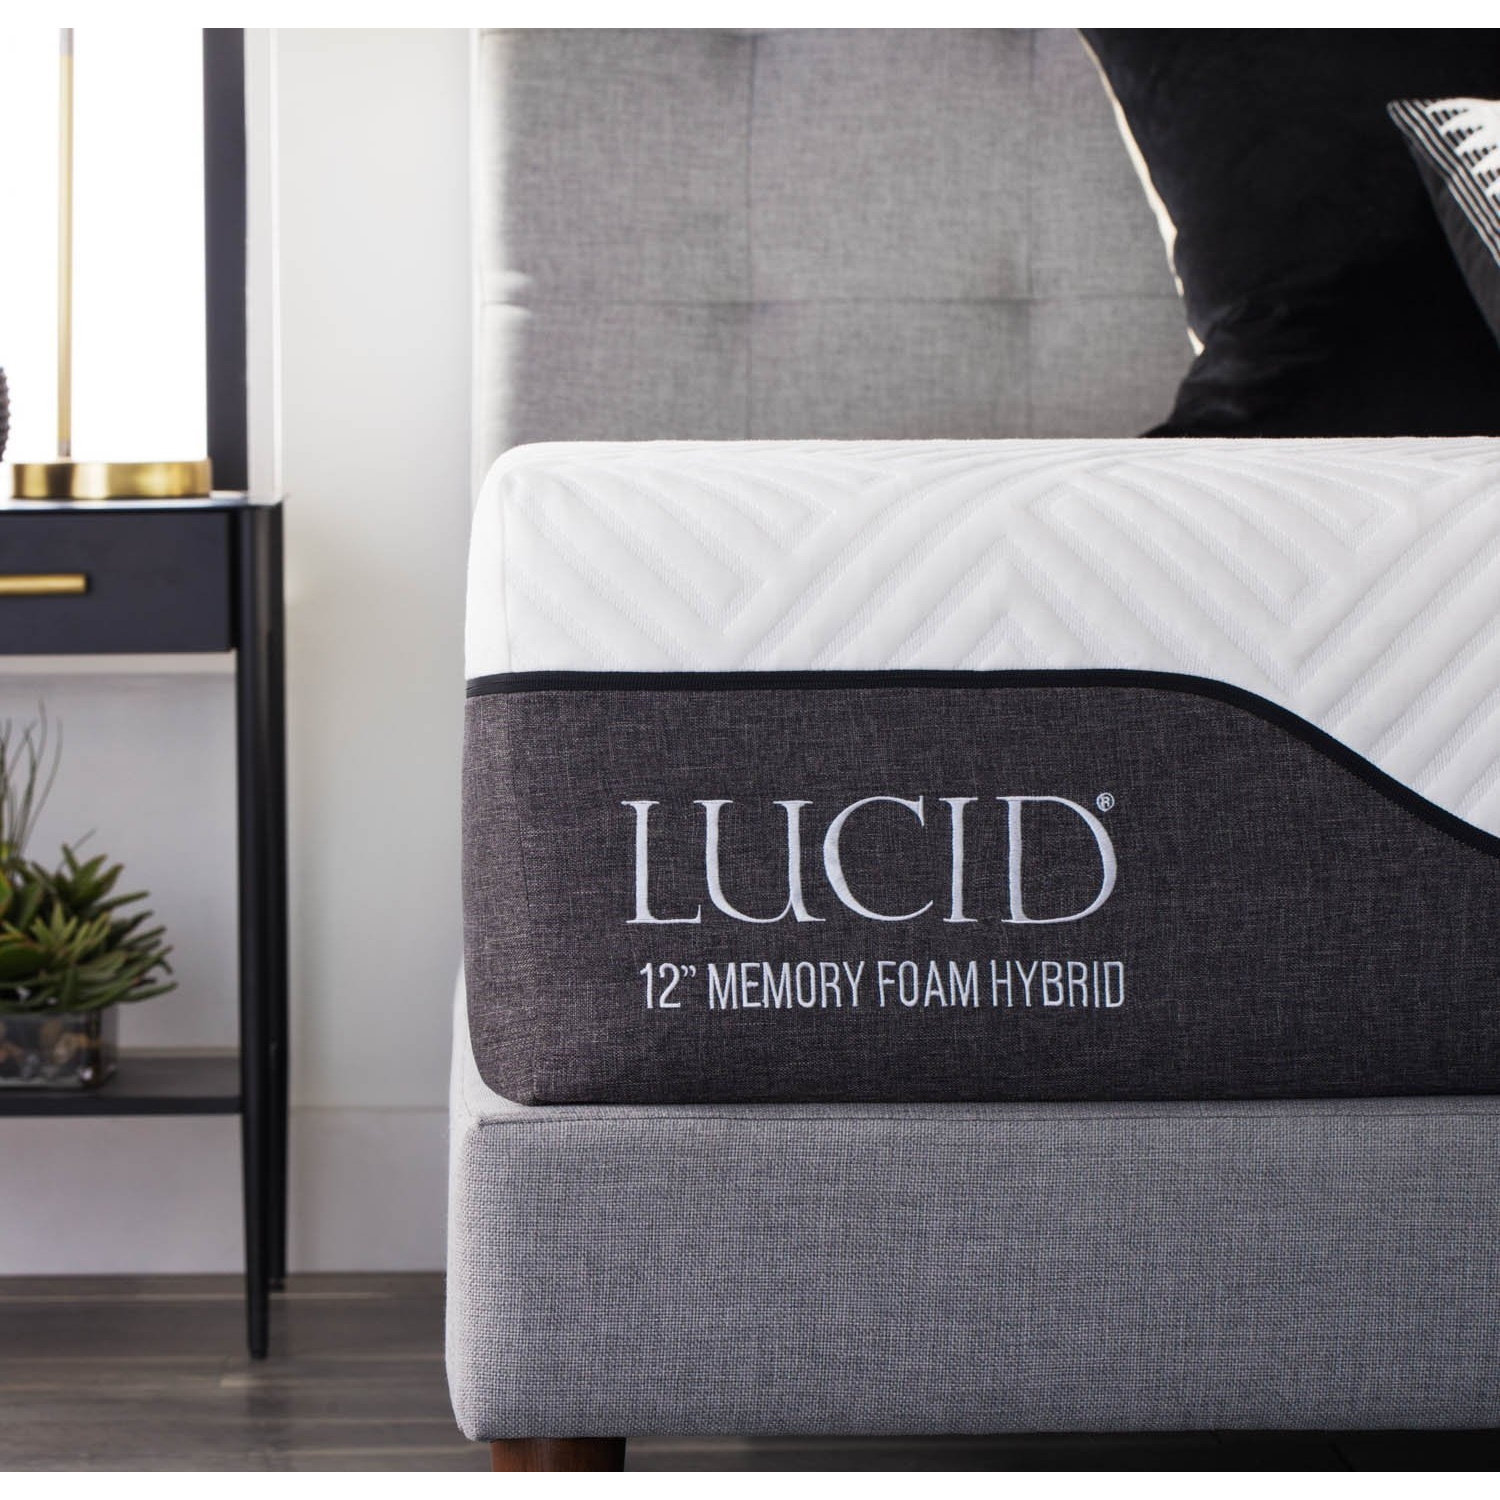 Lucid - Hybrid Memory Foam matras